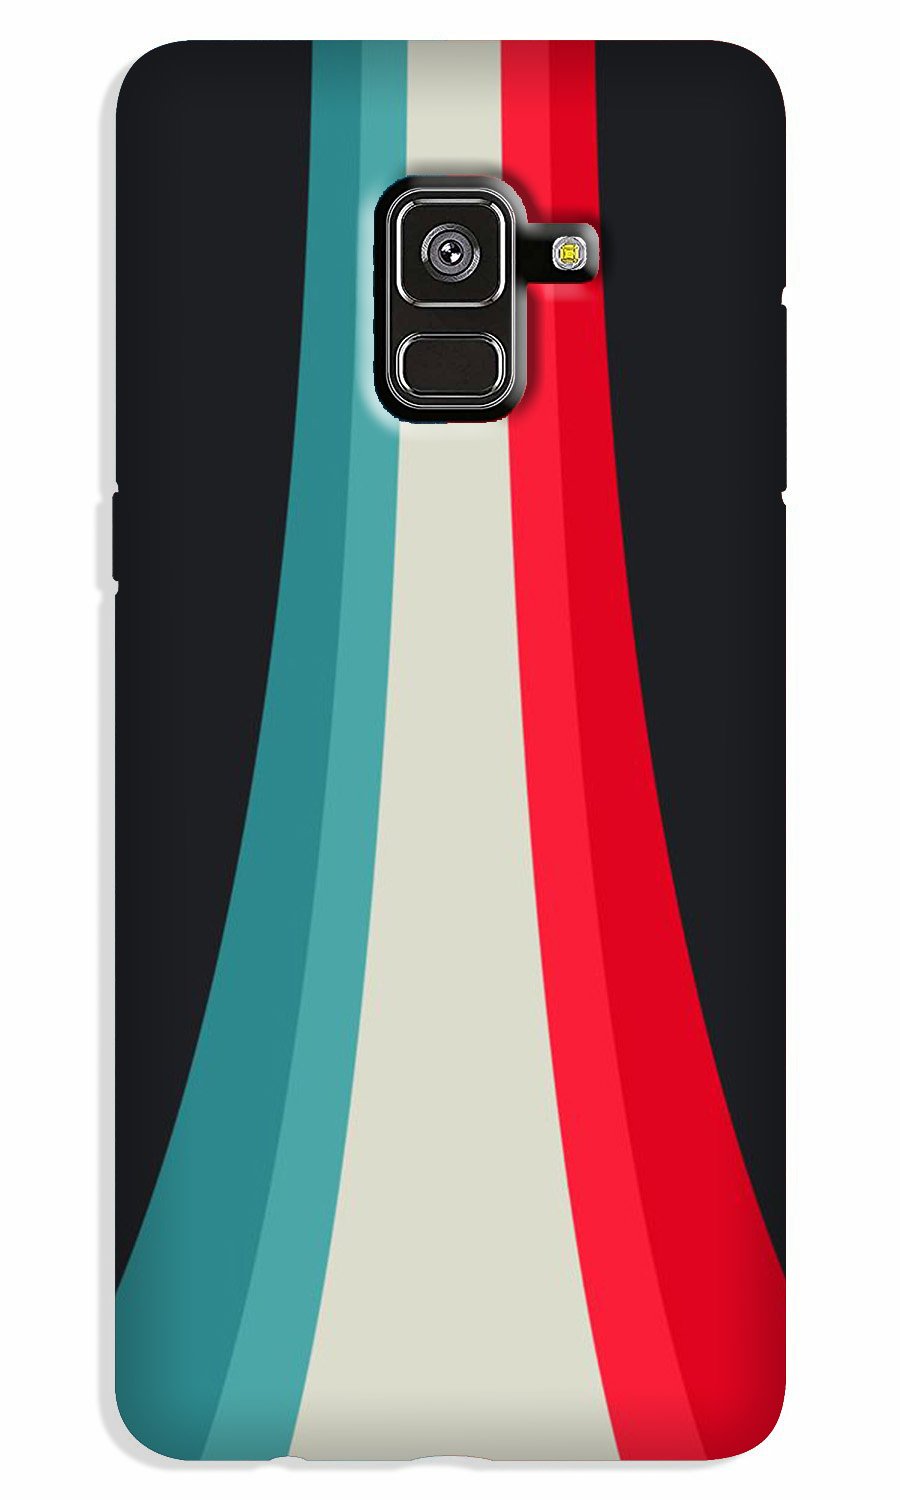 Slider Case for Galaxy A6 (Design - 189)